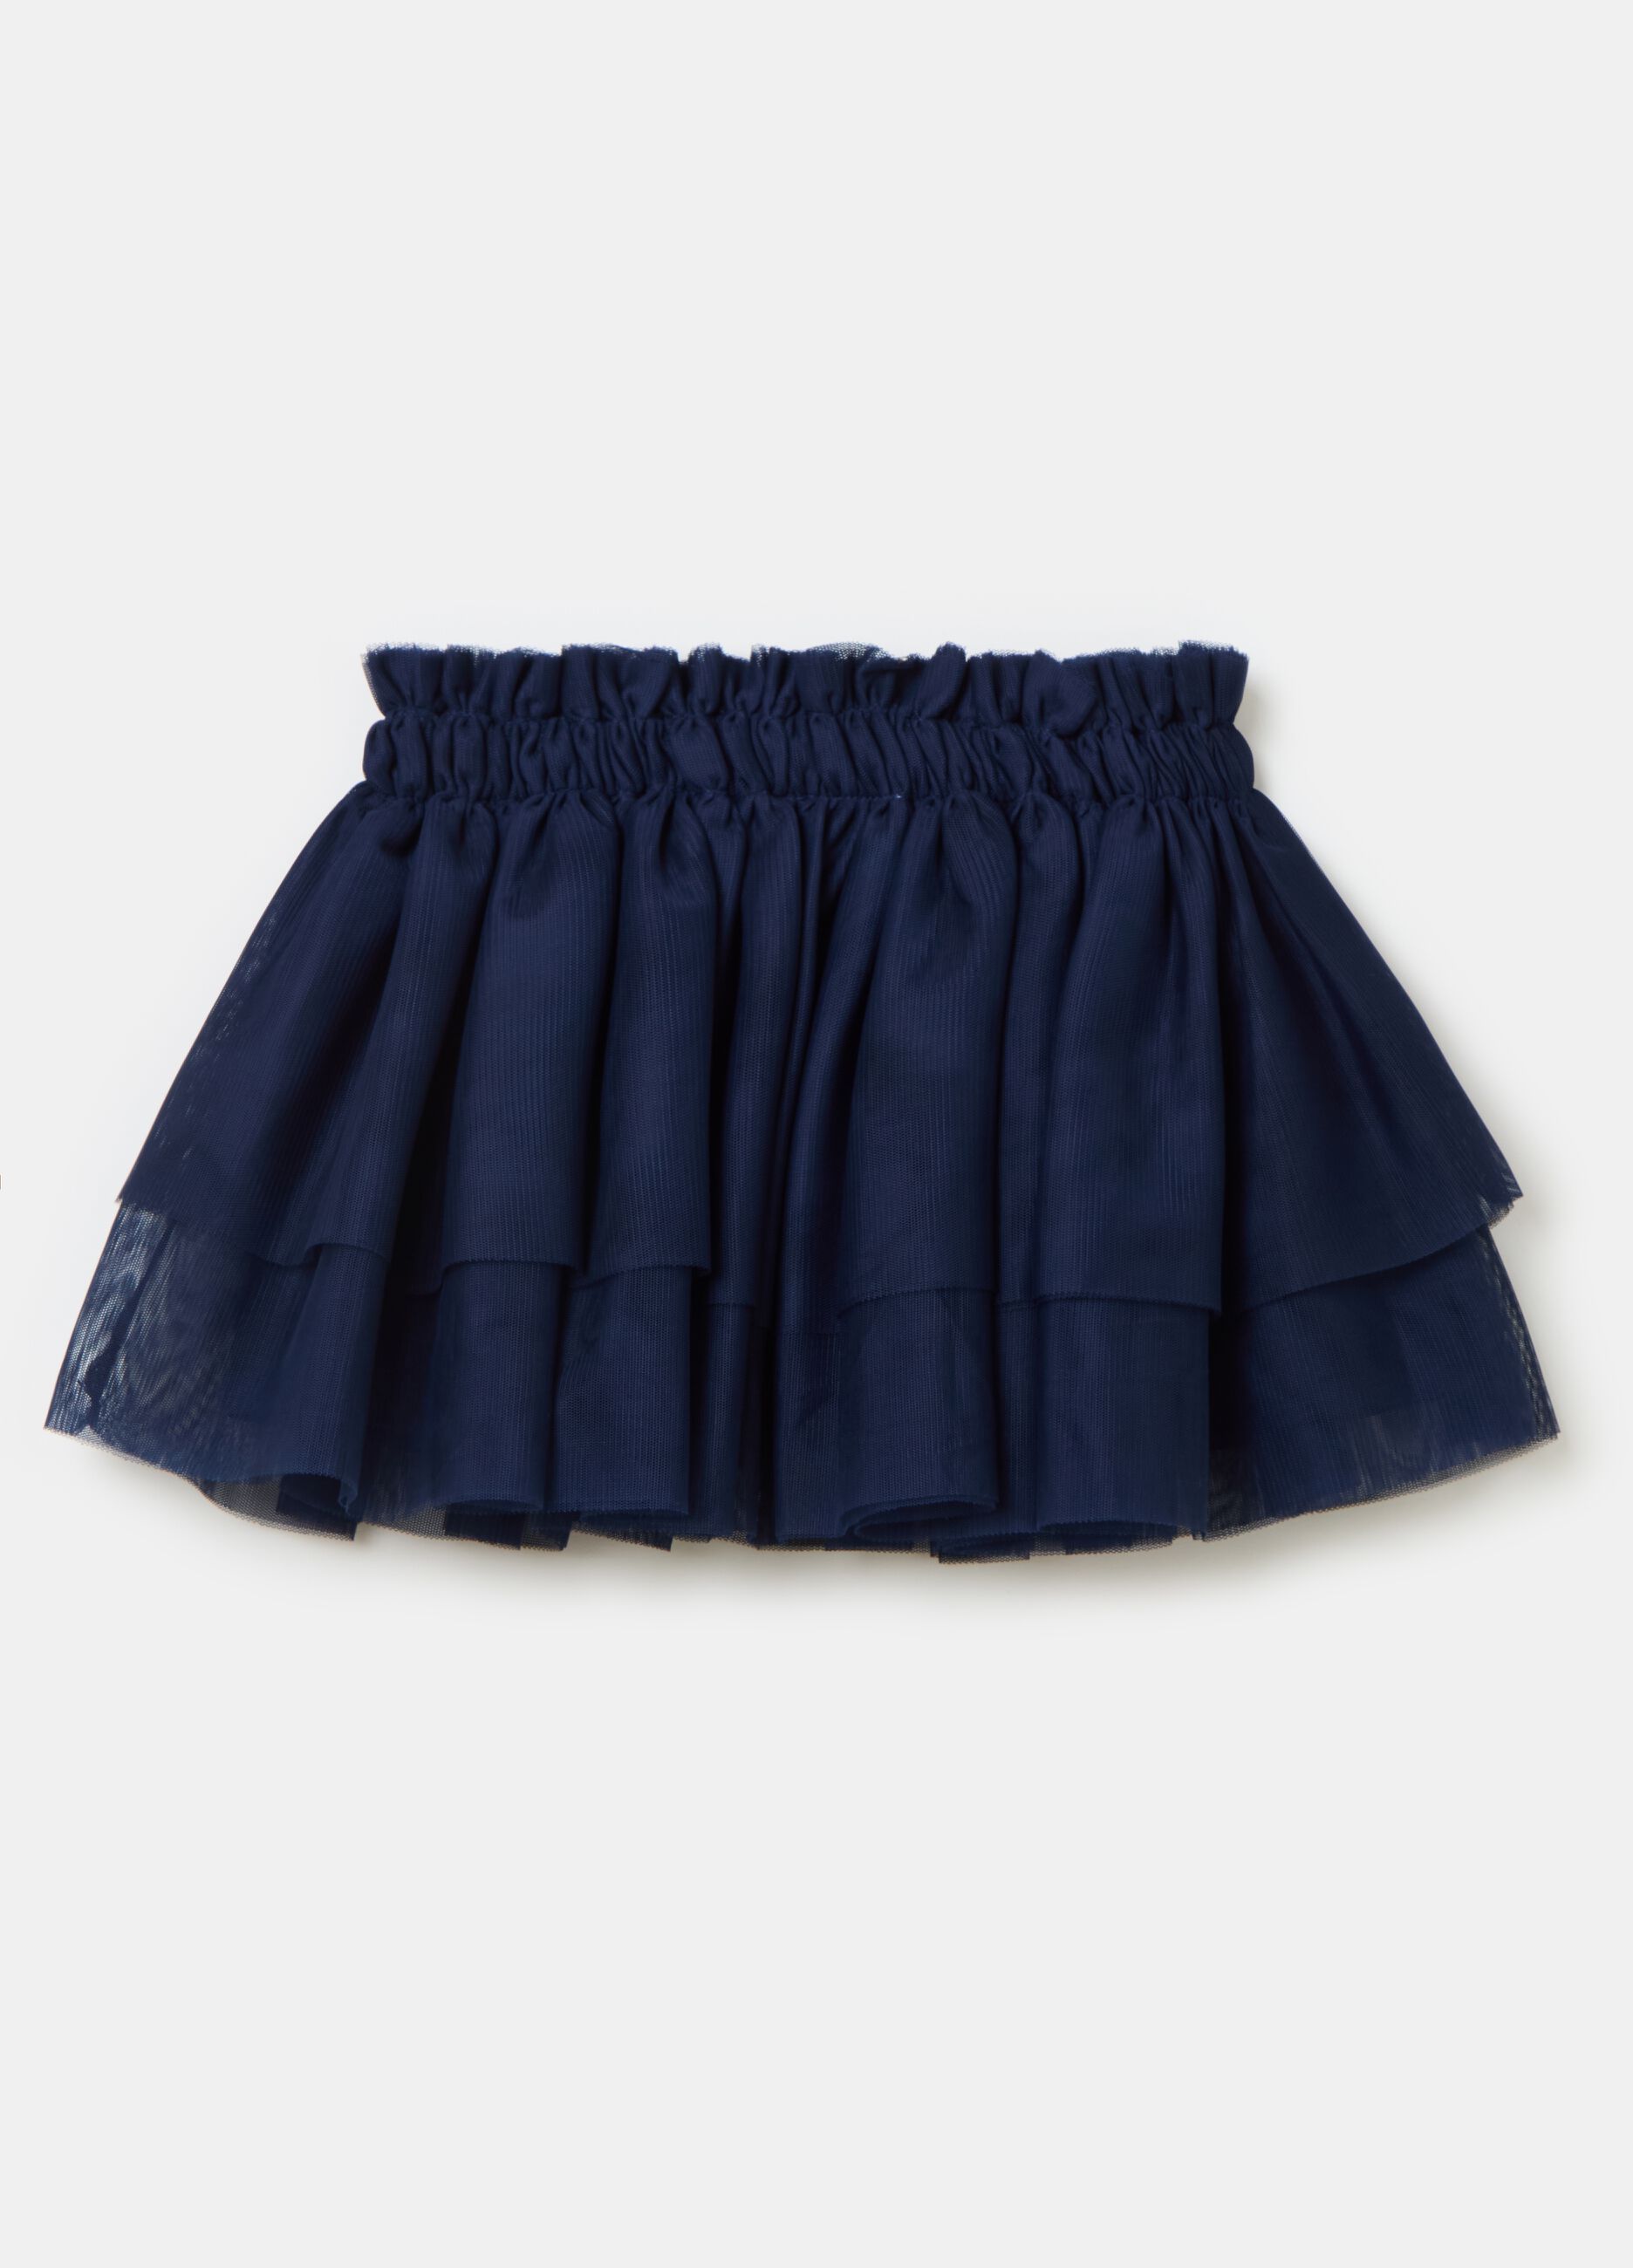 Tulle skirt with flounce